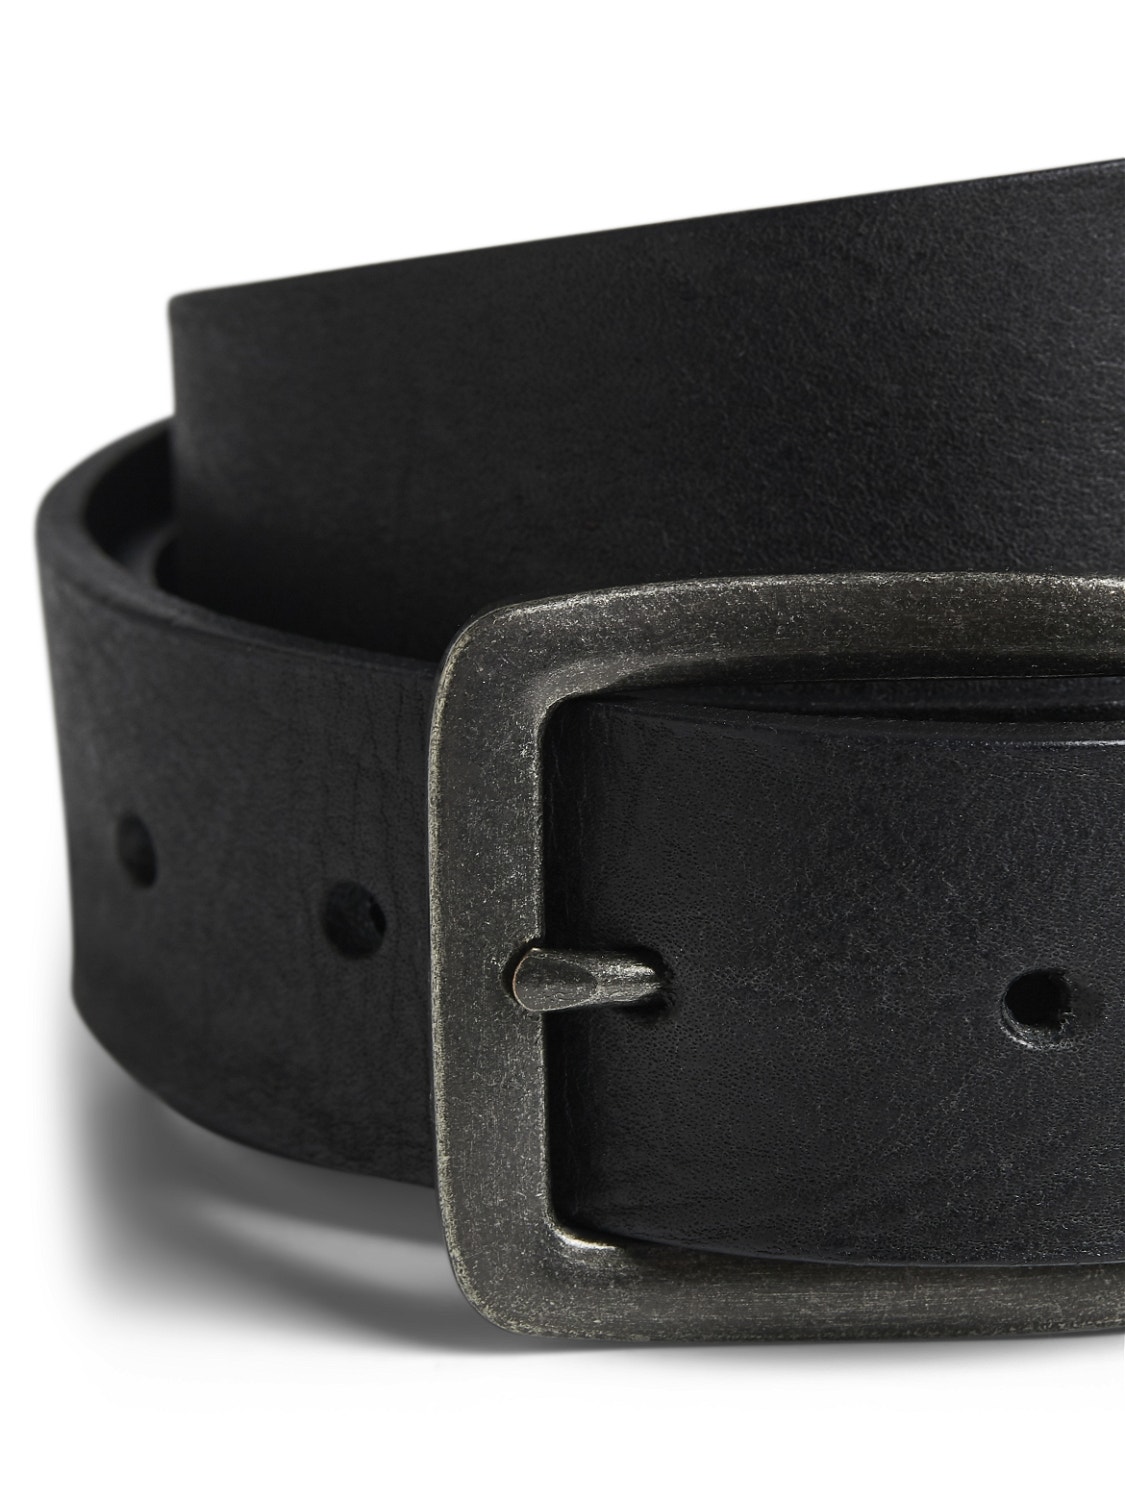 Jack & Jones Cintura Pelle -Black - 12152757